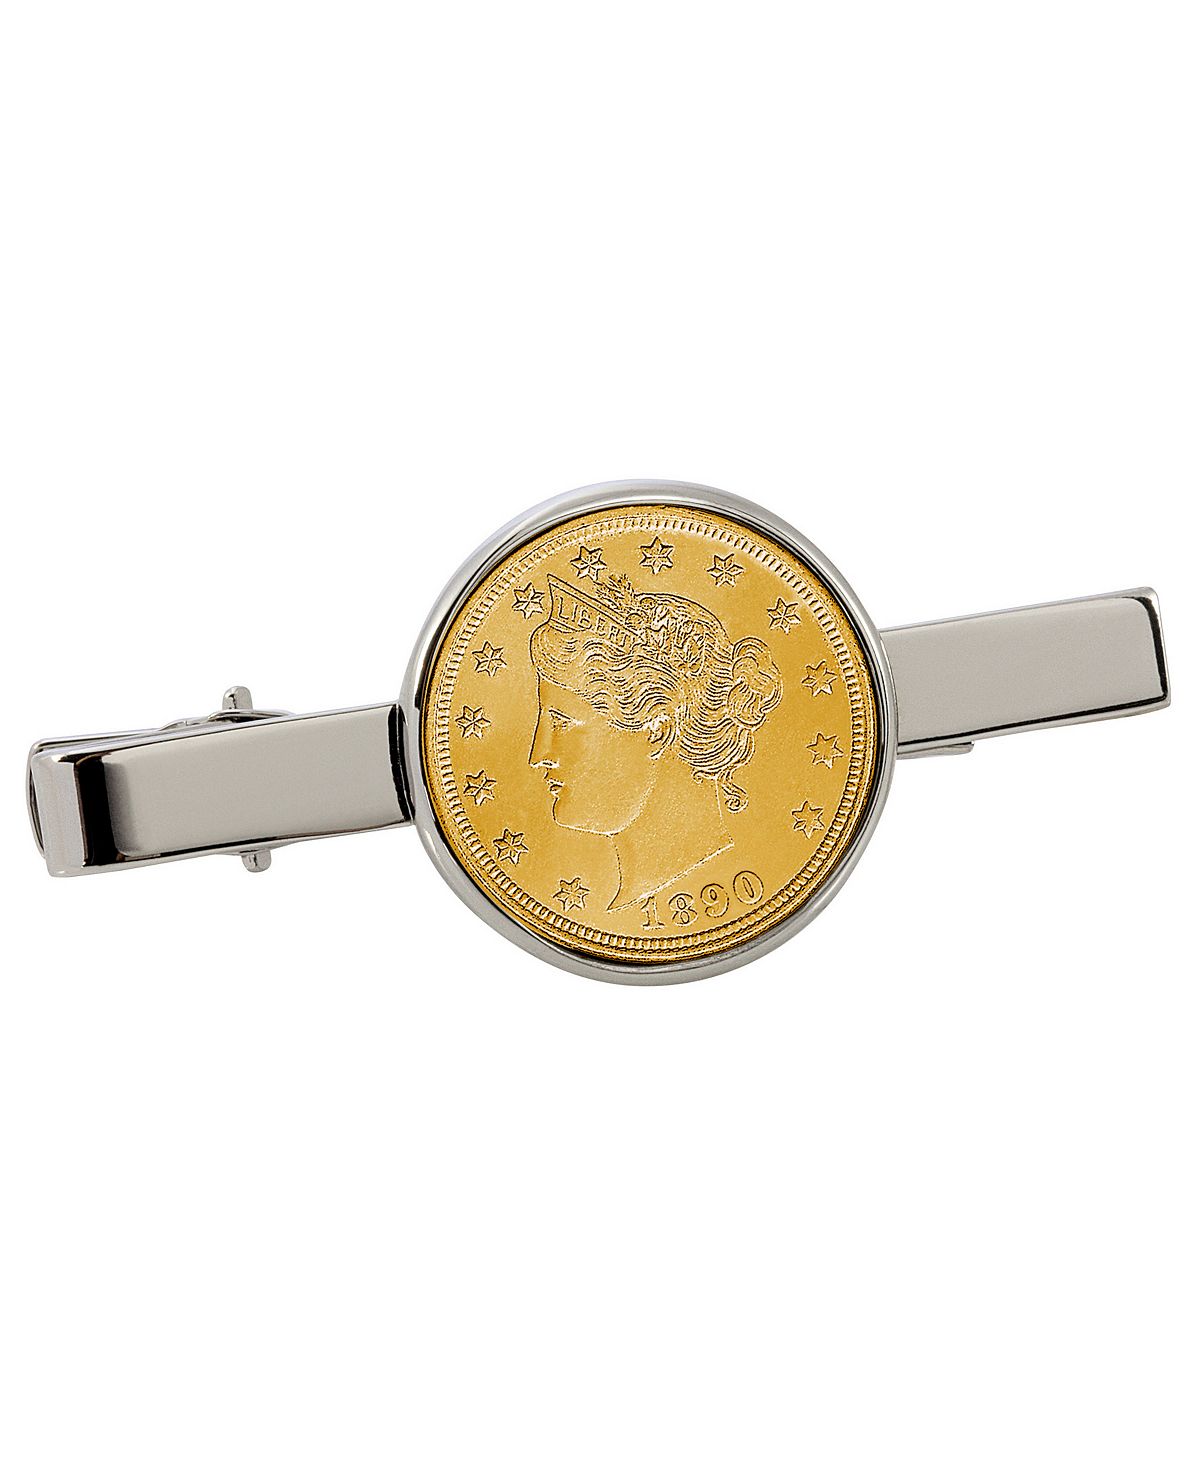 Позолоченный никелевый зажим для галстука для монет Liberty American Coin Treasures russia 1727 silver plated brass commemorative collectible coin gift lucky challenge coin